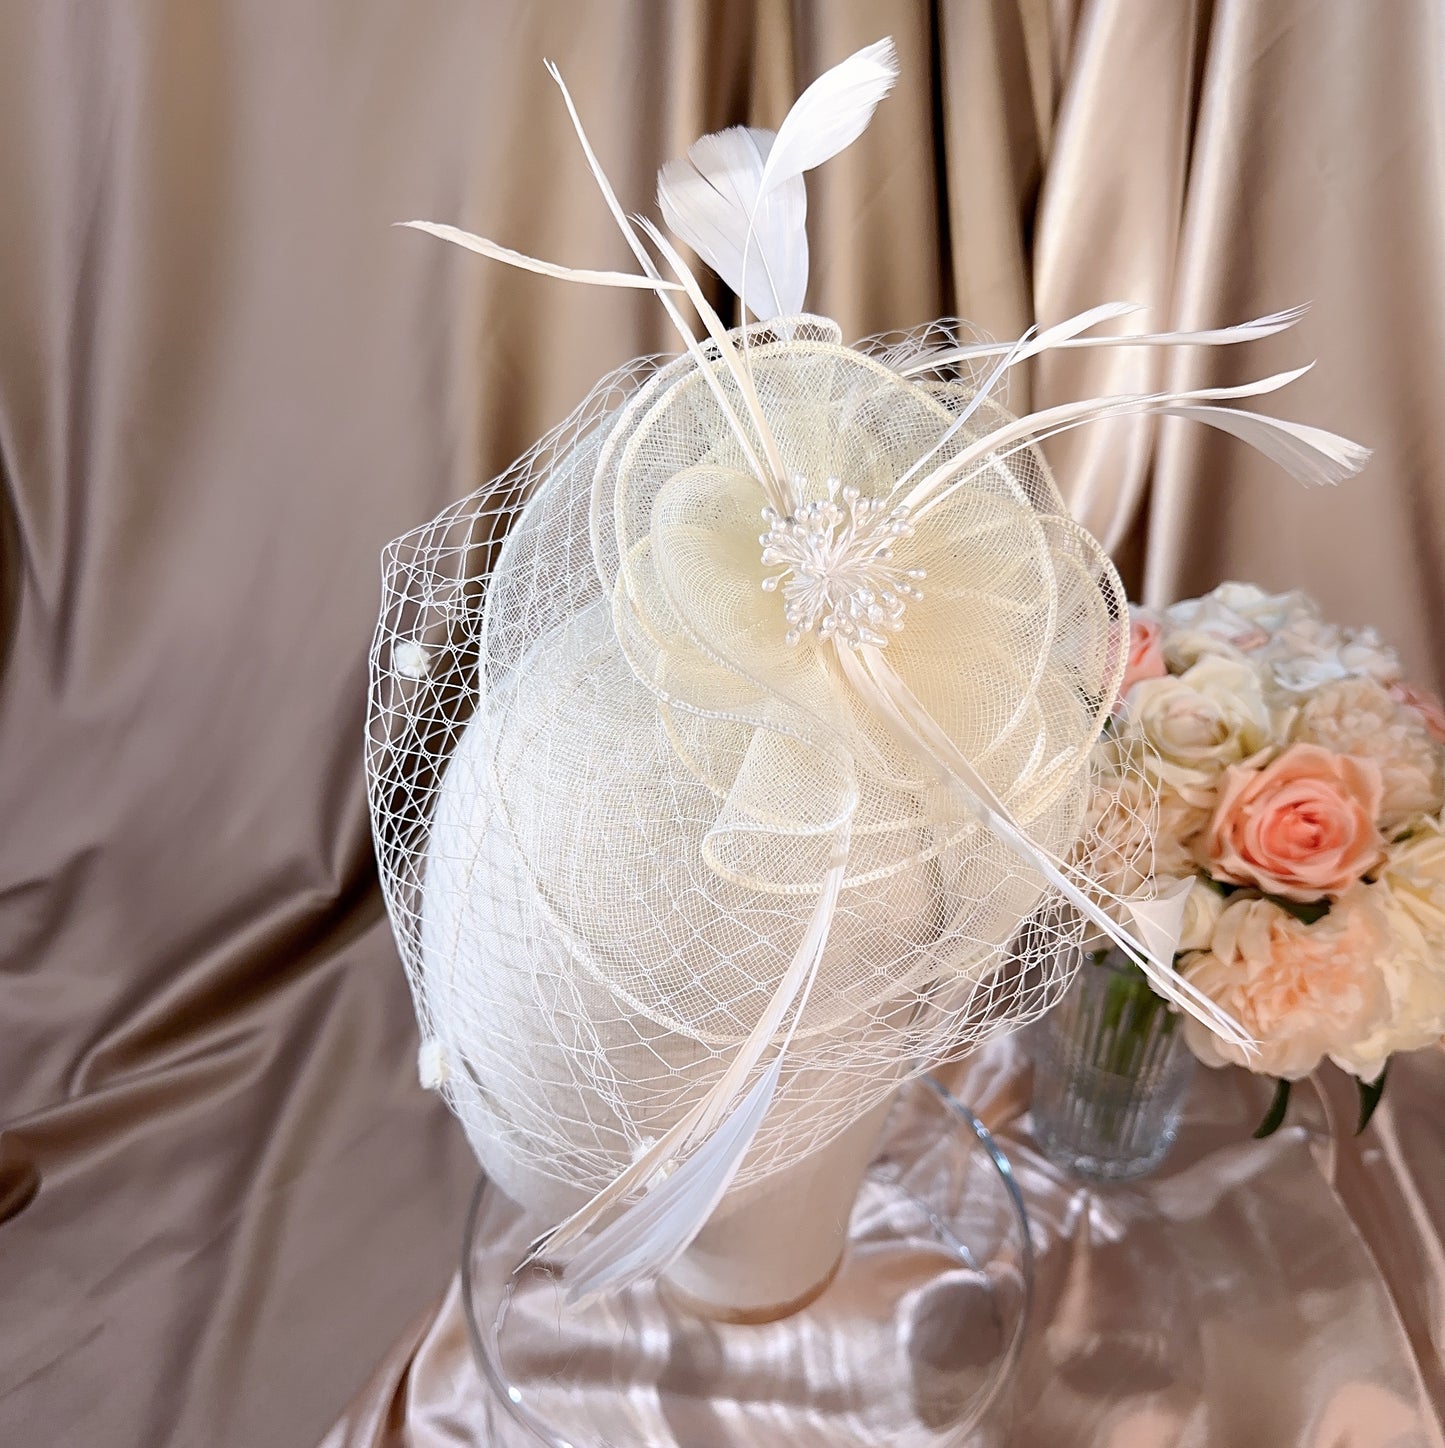 039480015 Bridal Hats for Wedding Tea Party Hats Fascinators (Available Black )